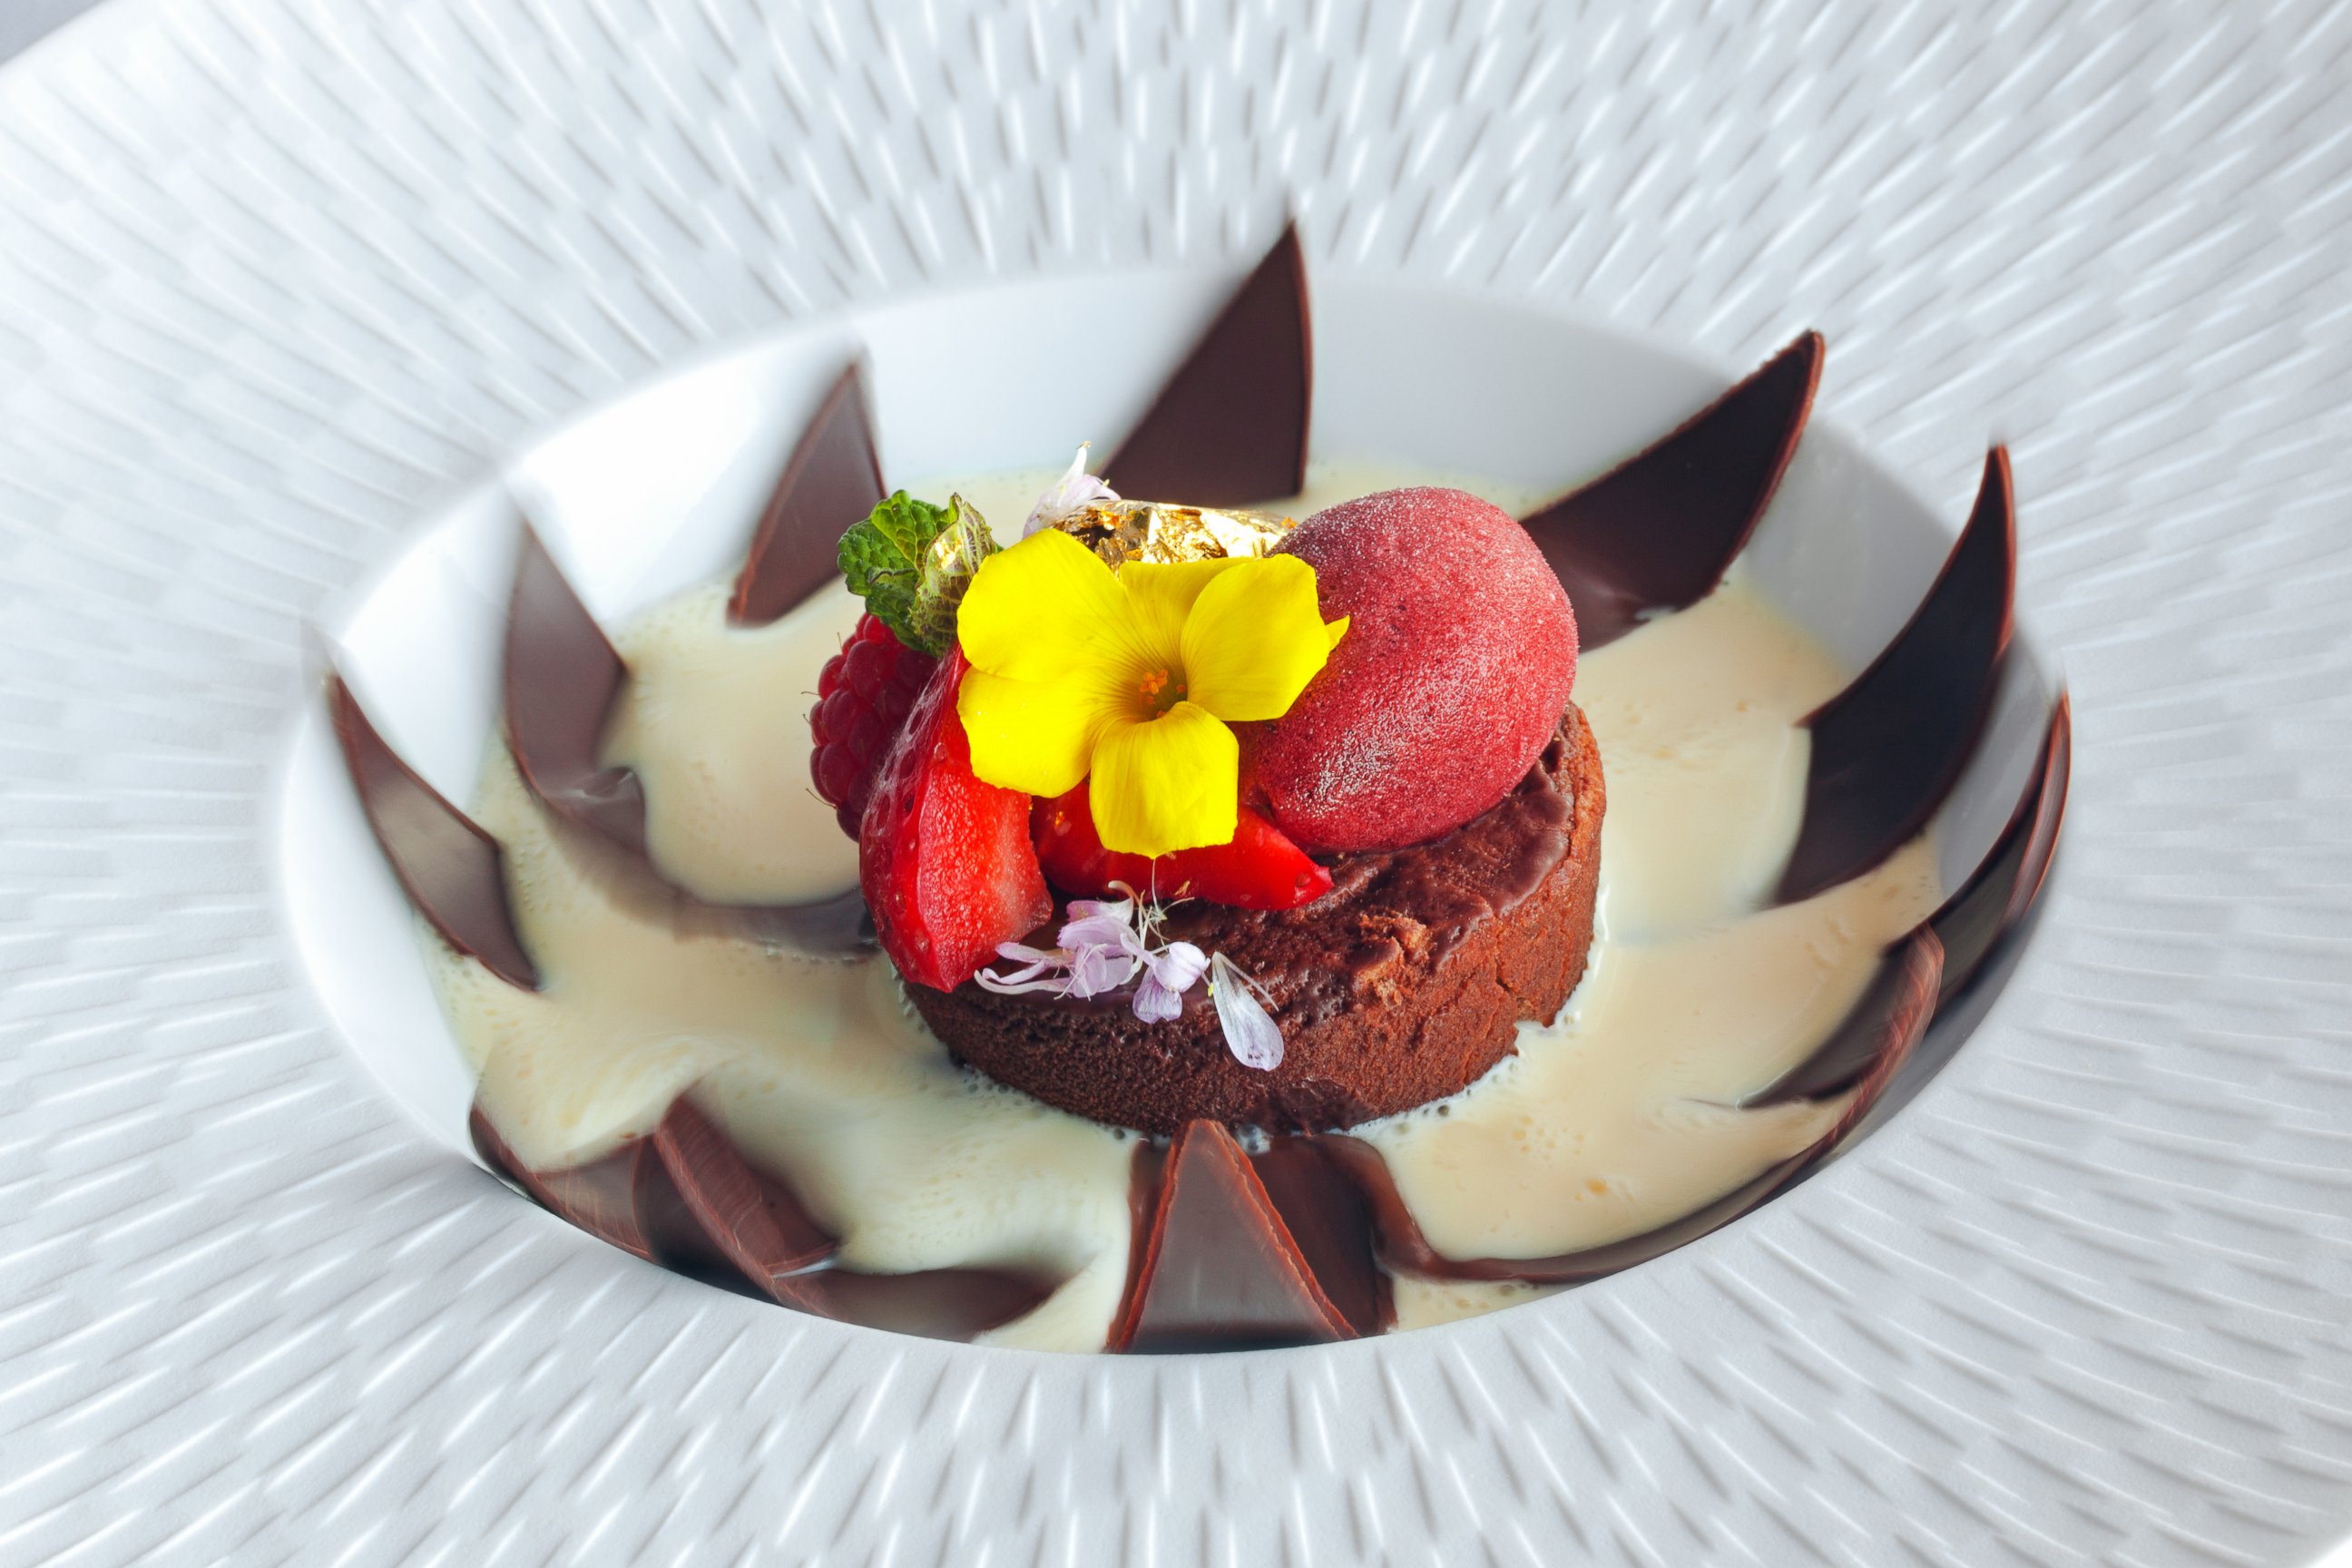 PHOTO: The chocolate flower dessert, fully open